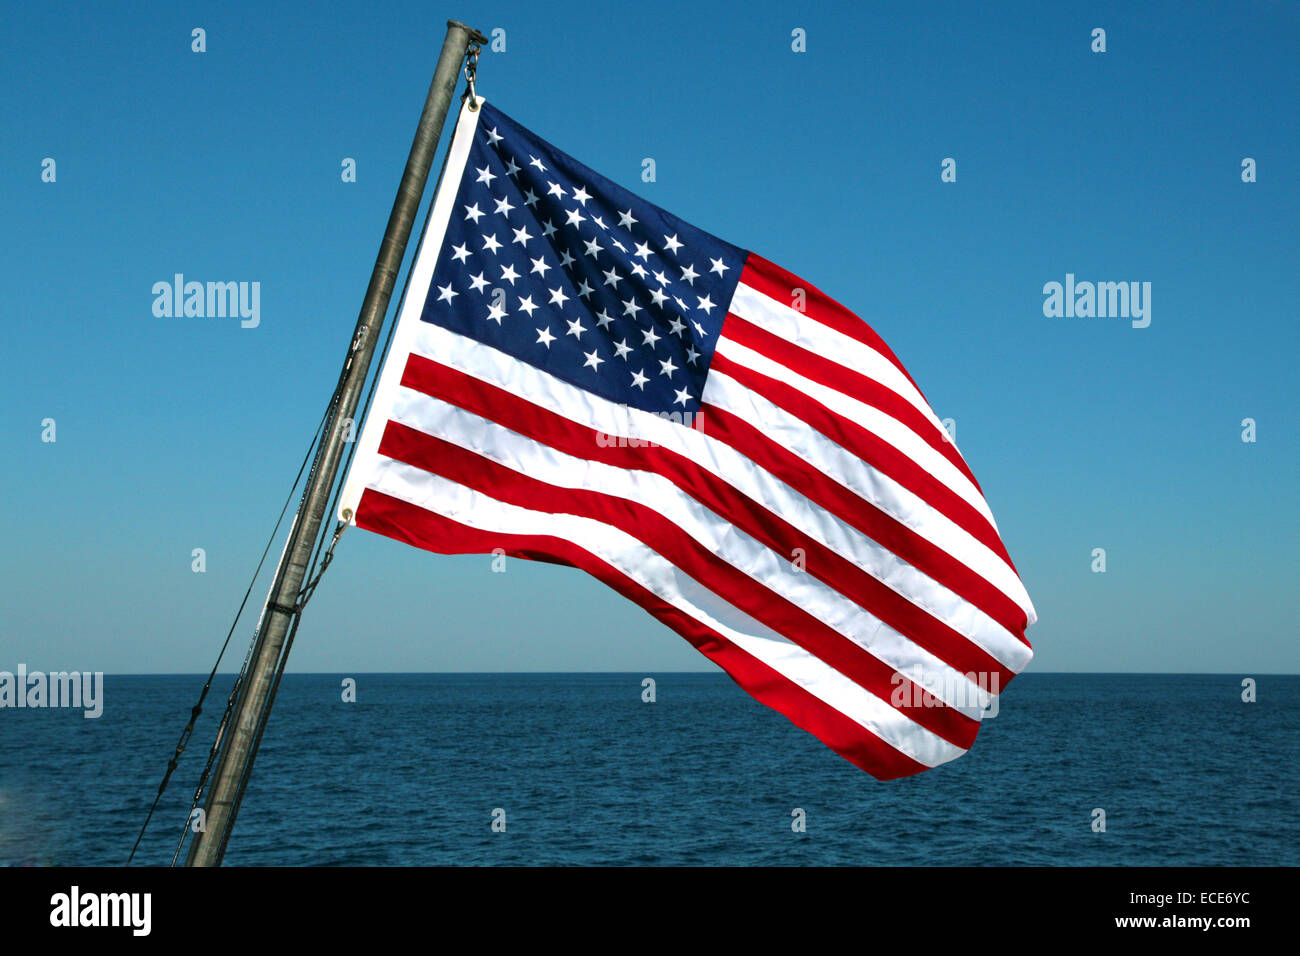 Flagge Amerikanische Flag American Amerika Fahne Fahnen Amerikanisch typisch typical America Stars and Stripes red blue white ro Stock Photo